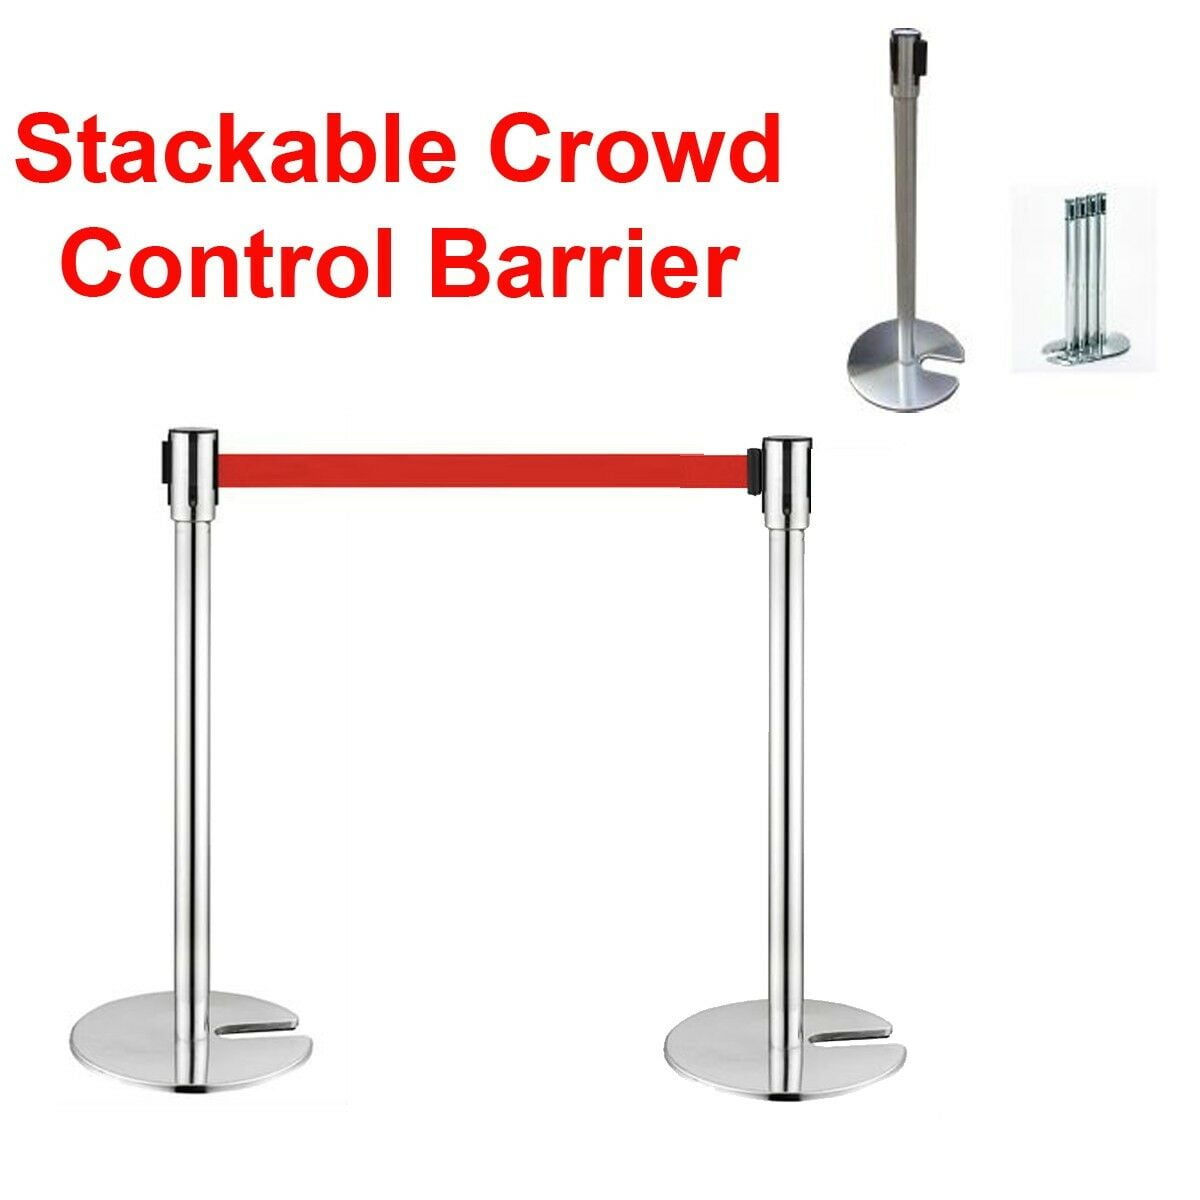 2/3M Stanchion Queue Barrier Wall Mount Crowd Control Belt Retractable 2 styles 